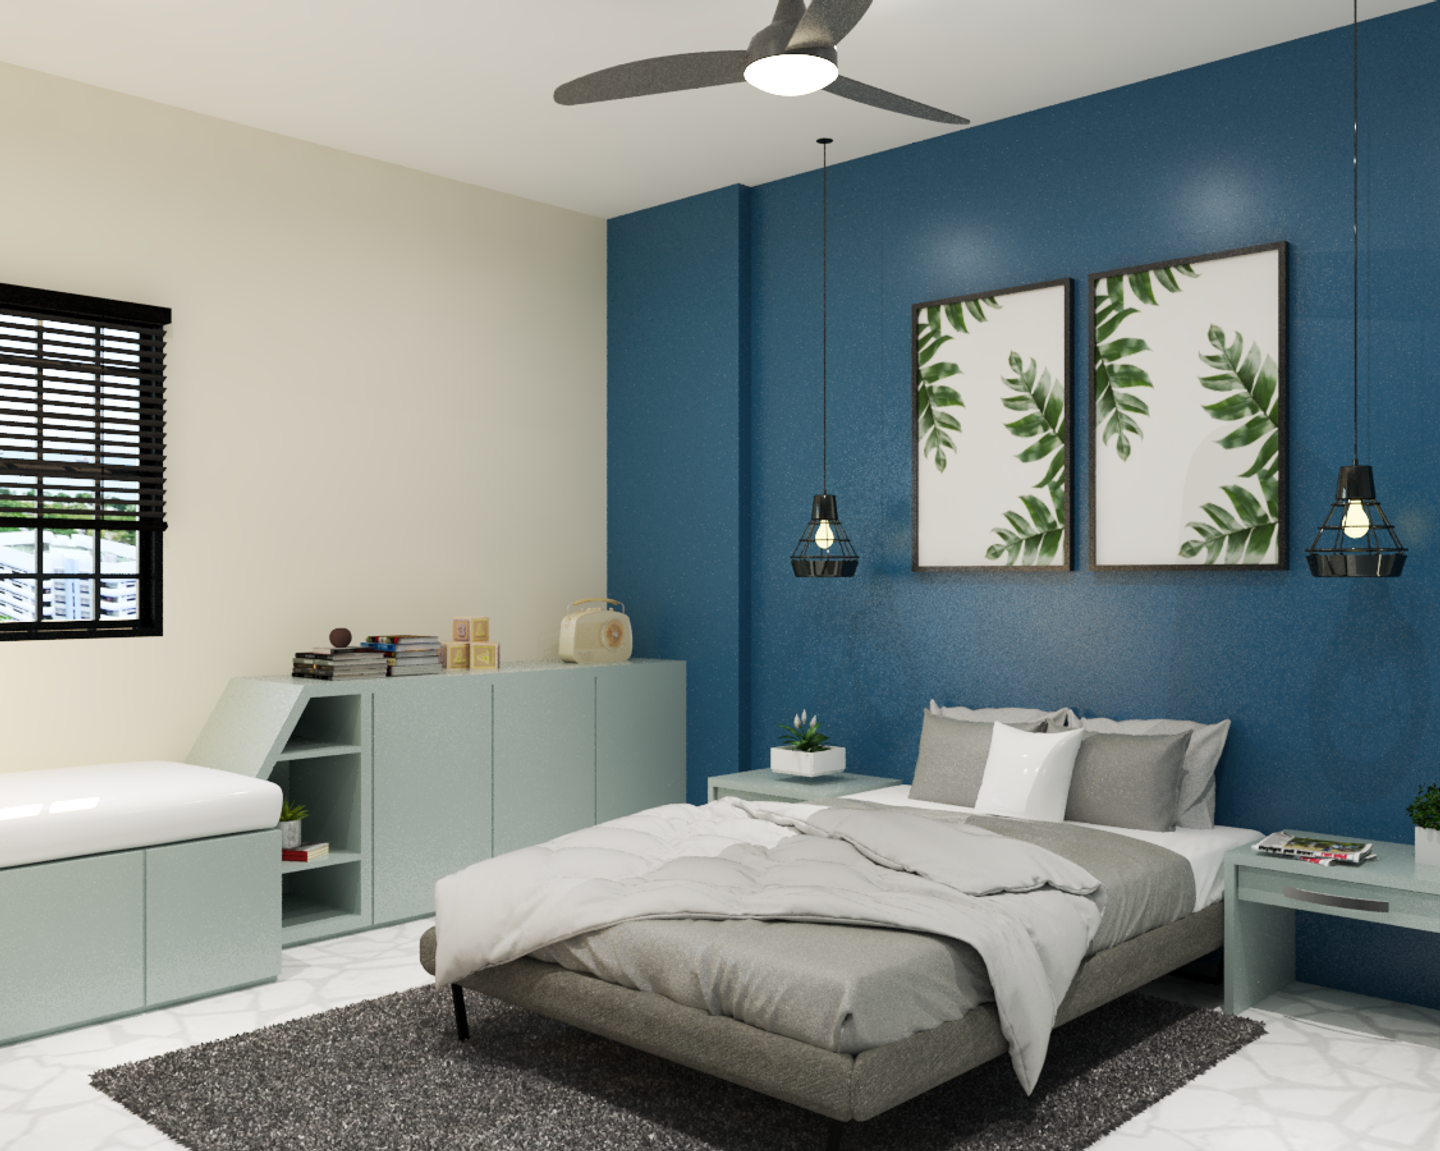 Modern Master Bedroom Interior Design with Window Bench - Livspace